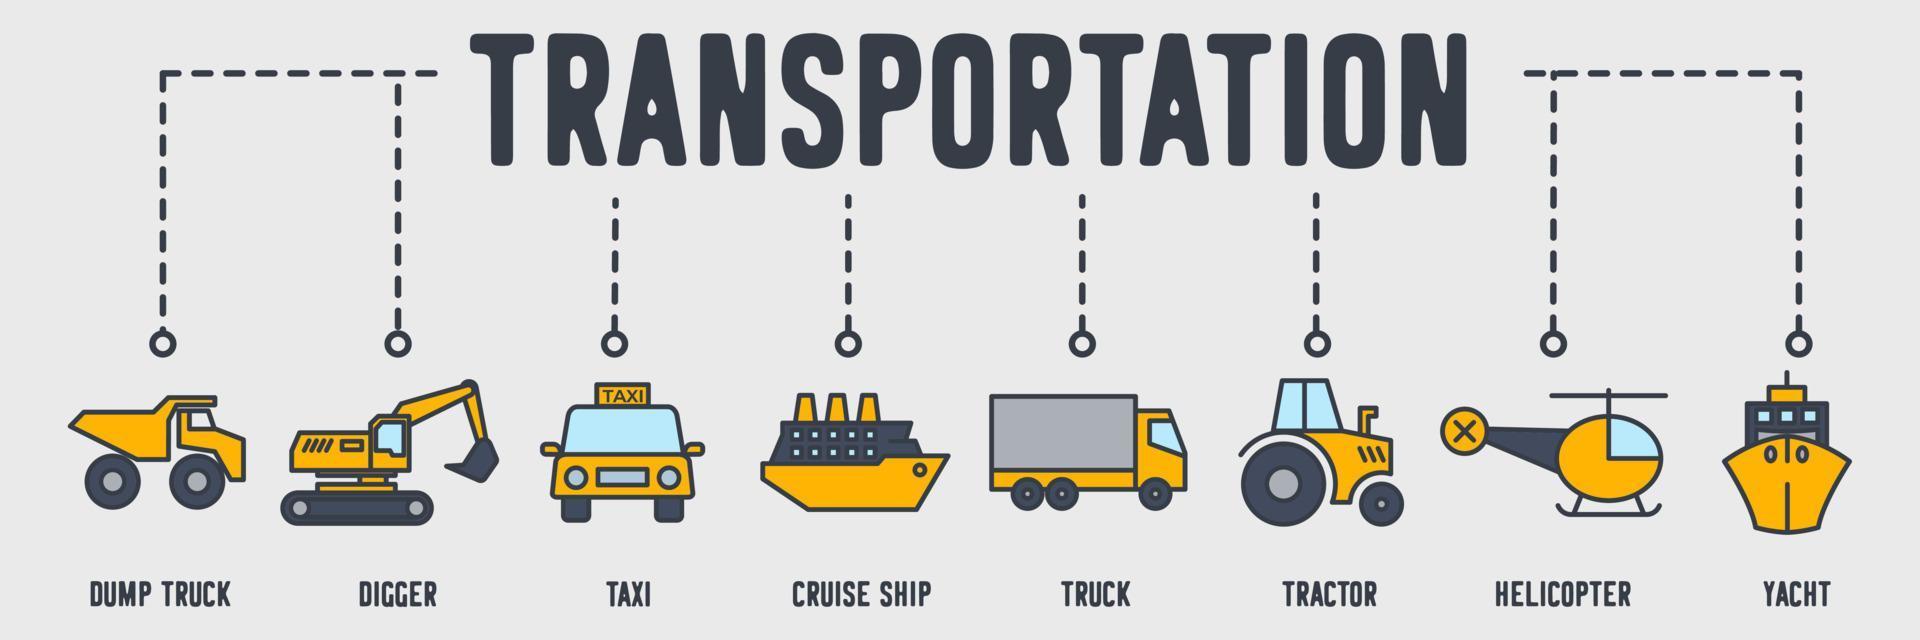 icono de web de banner de vehículo de transporte. camión volquete, tranvía, taxi, crucero, camión, tractor, helicóptero, yate, concepto de ilustración vectorial de montacargas. vector